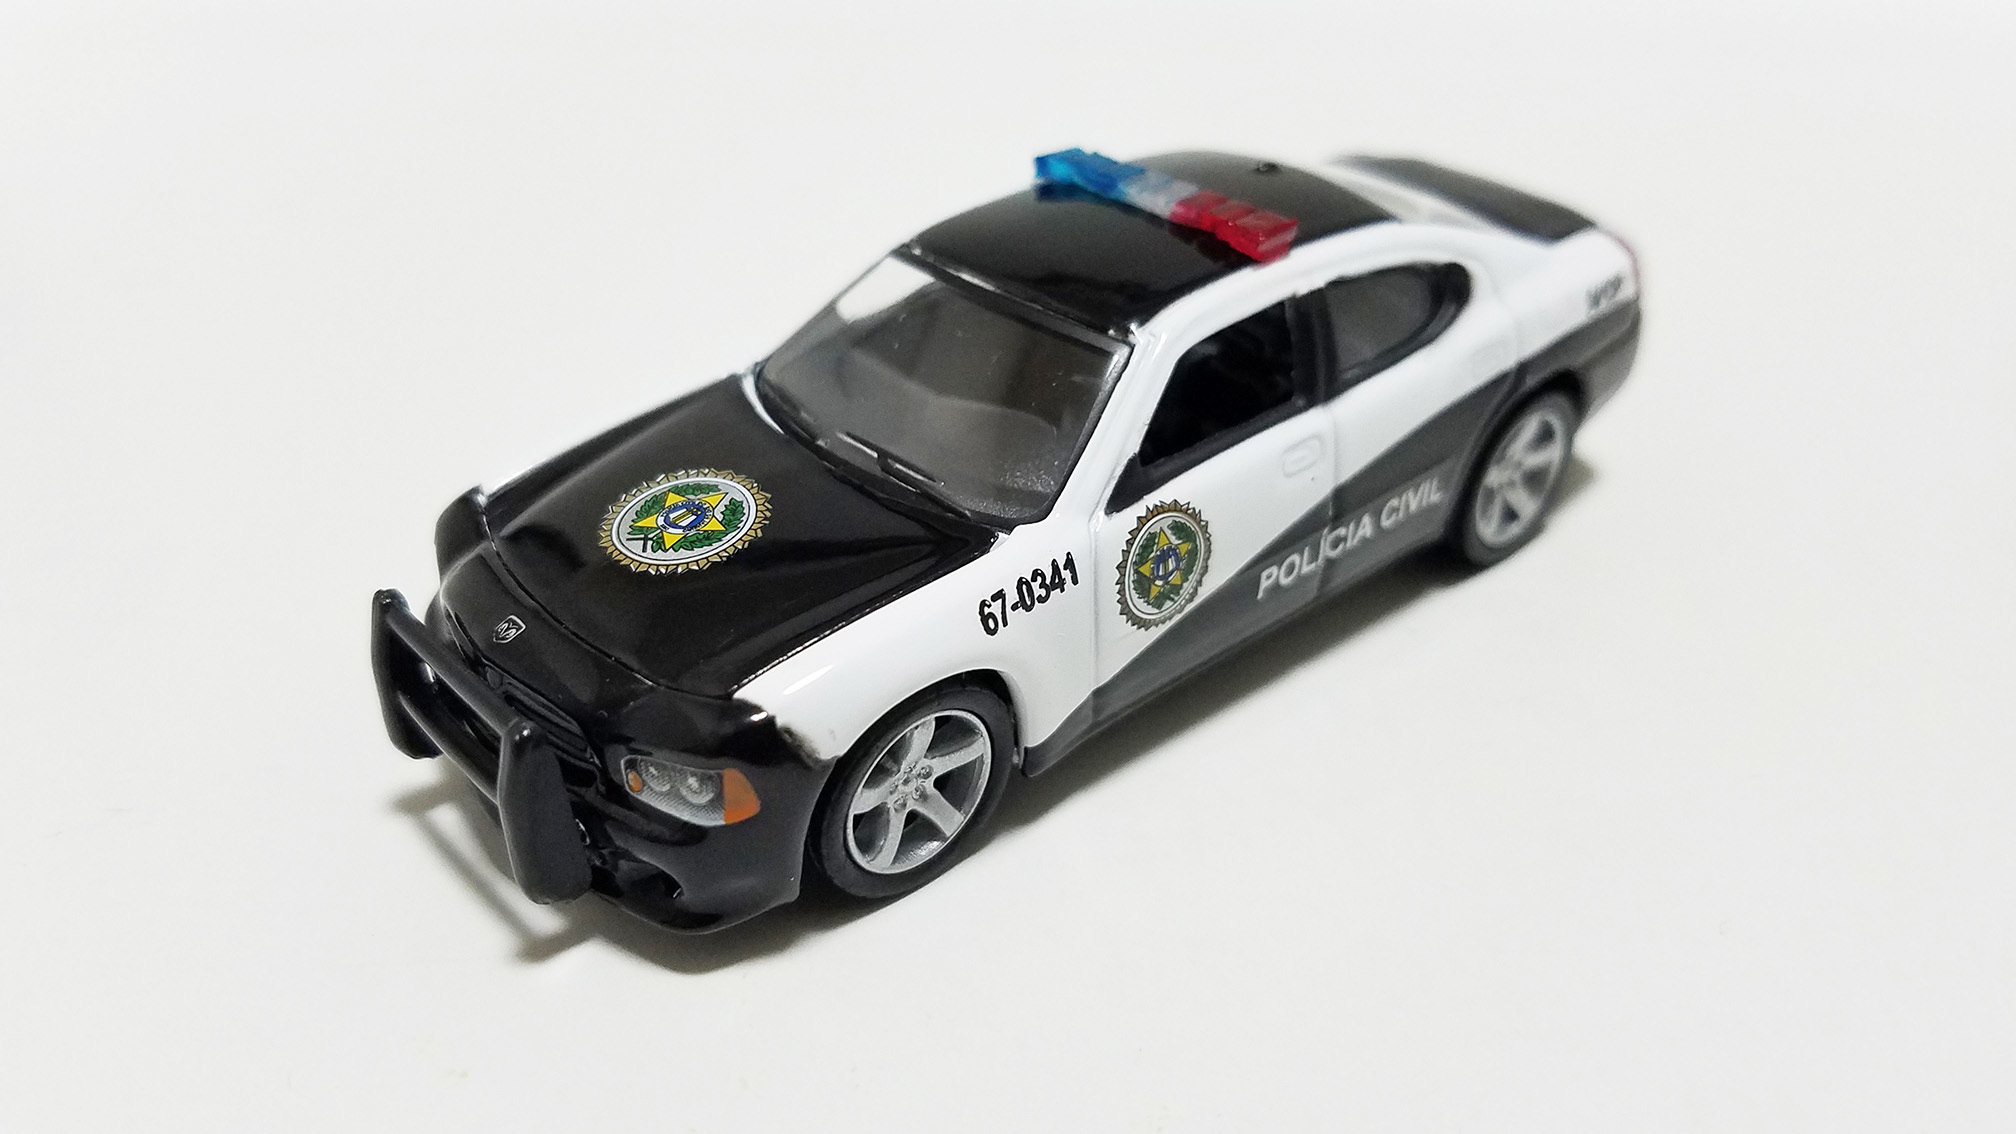 GREEN LIGHT] Dodge Charger Rio Police - ken motors ver.2